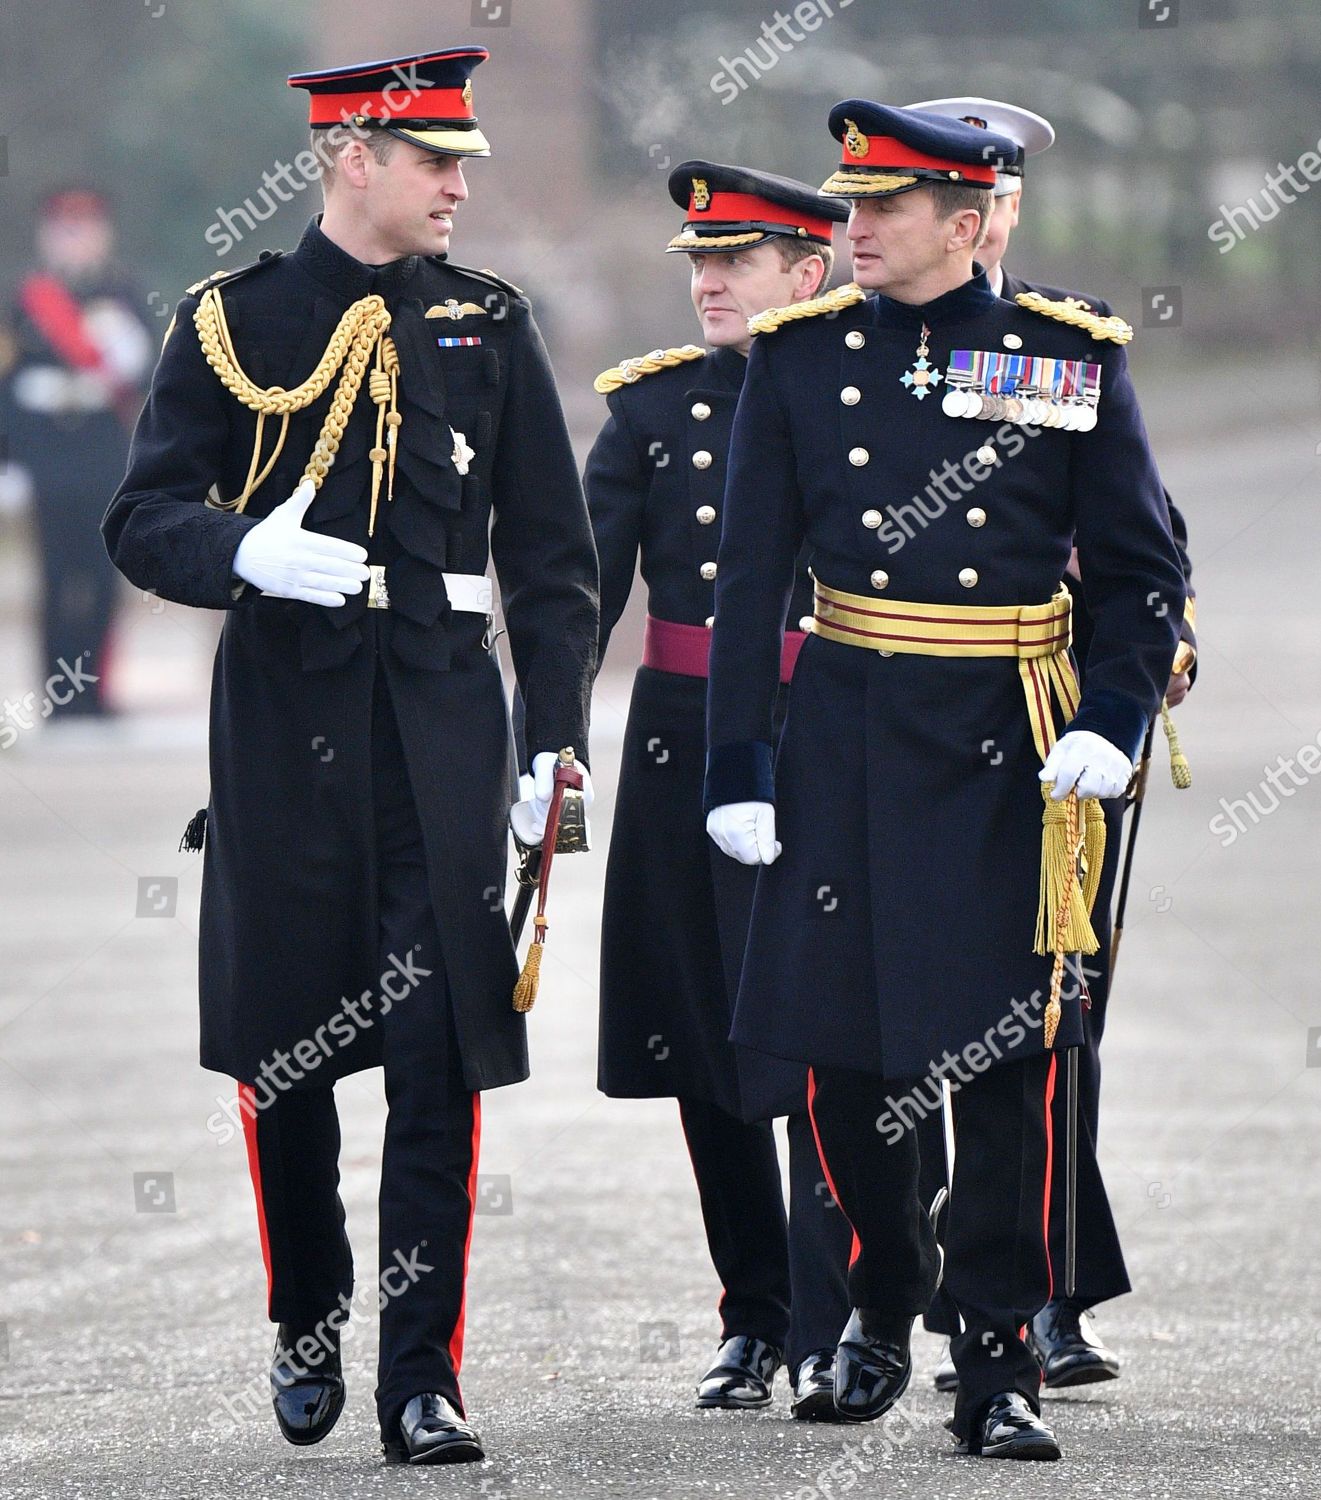 sovereigns-parade-at-the-royal-military-academy-sandhurst-berkshire-uk-shutterstock-editorial-10033849x.jpg